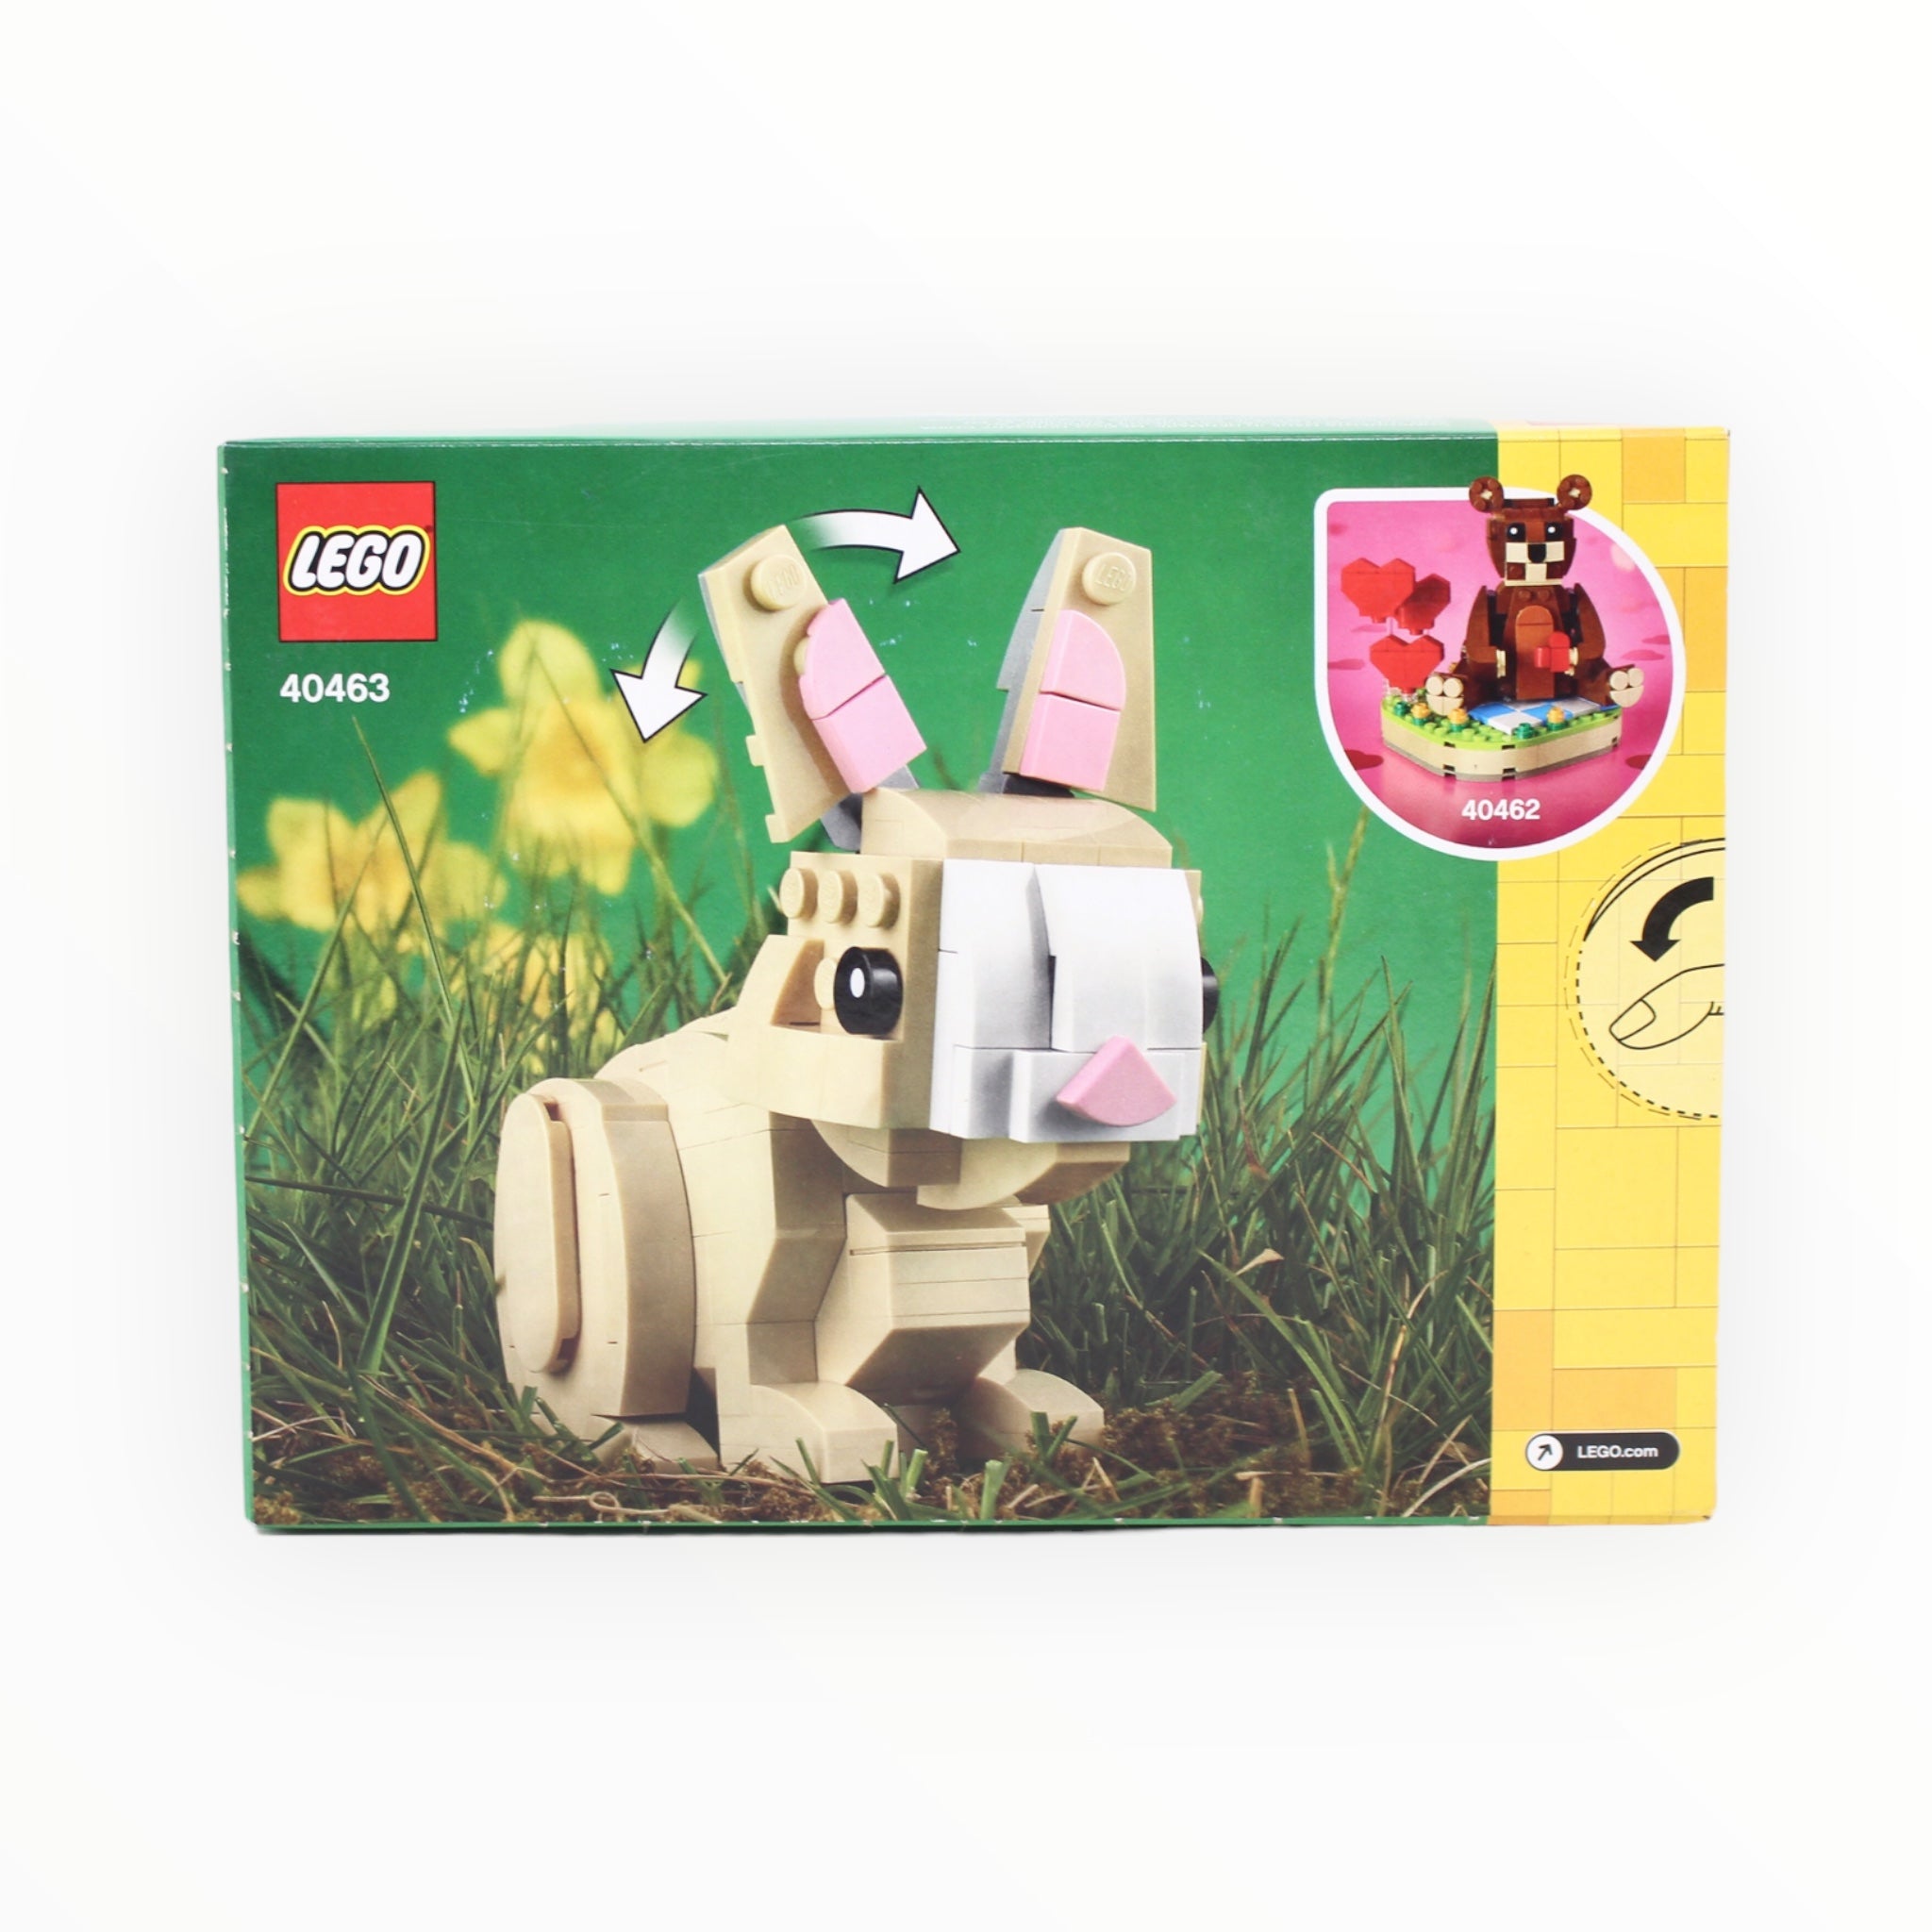 Retired Set 40463 LEGO Easter Bunny (2021)